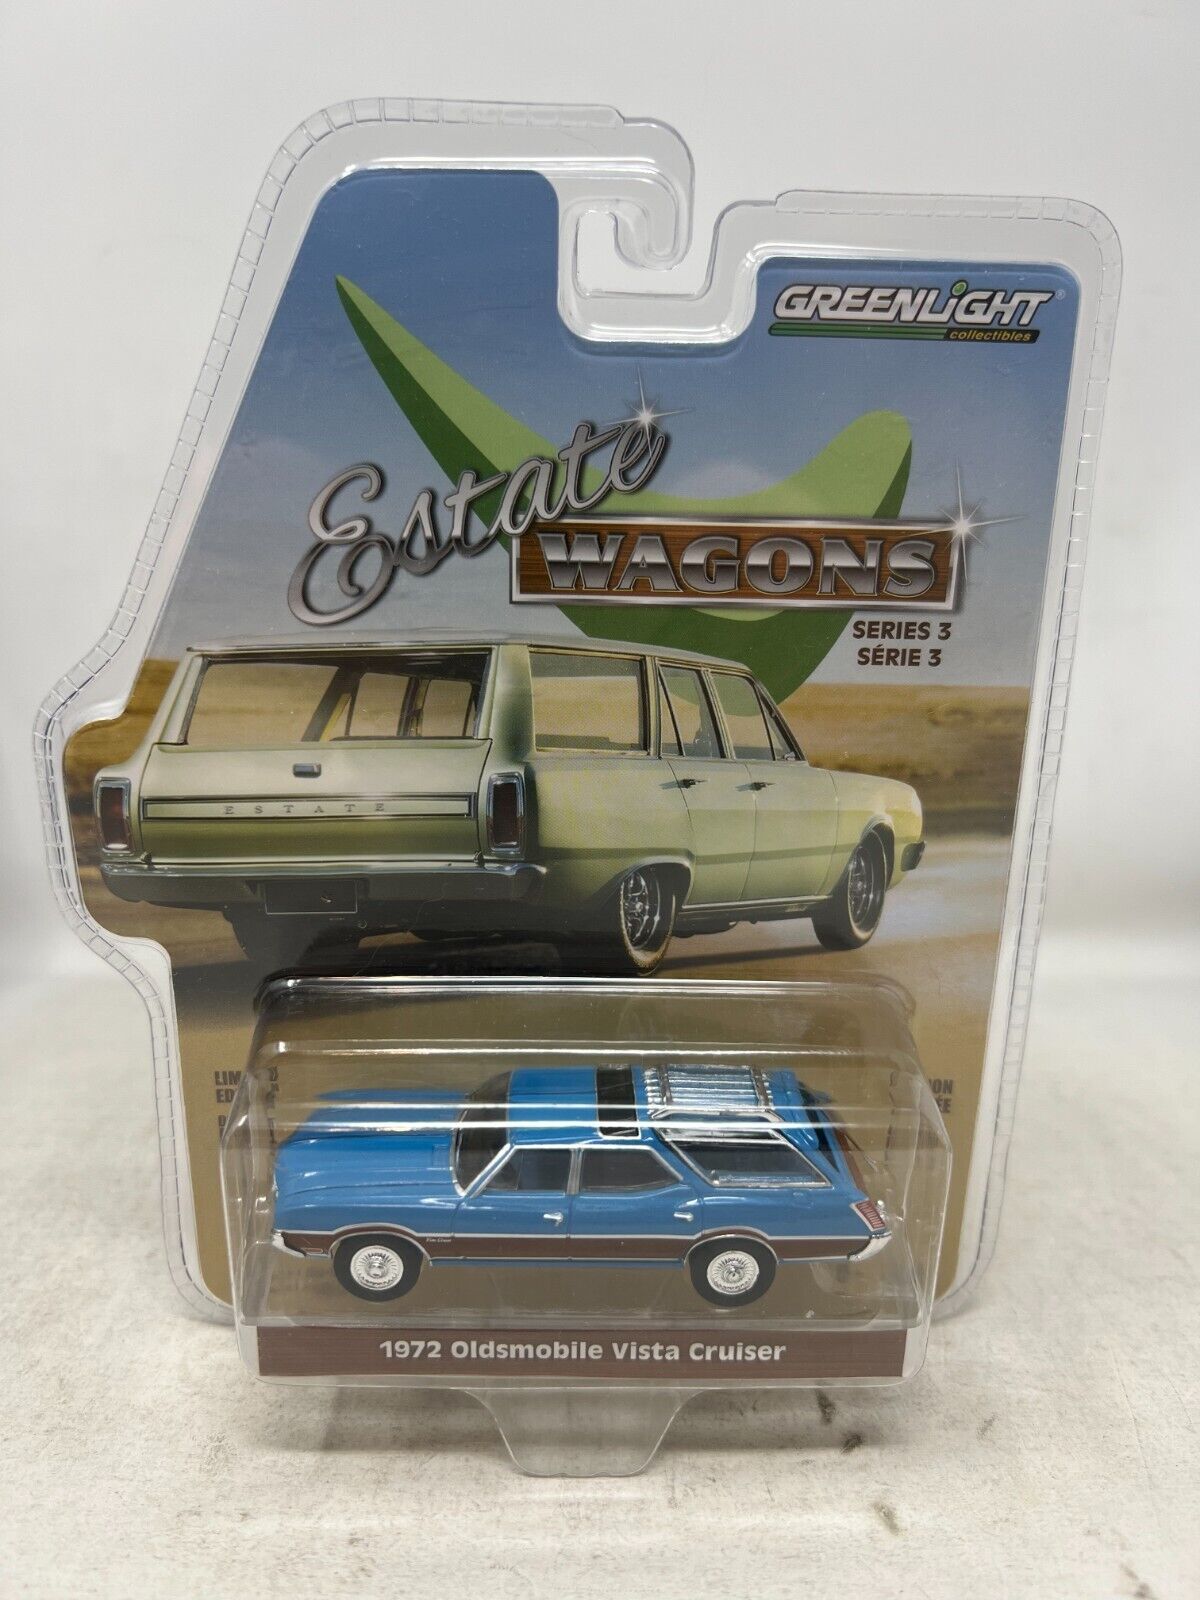 Greenlight Estate Wagons Series 3 1972 Oldsmobile Vista Cruiser 1:64 Diecast